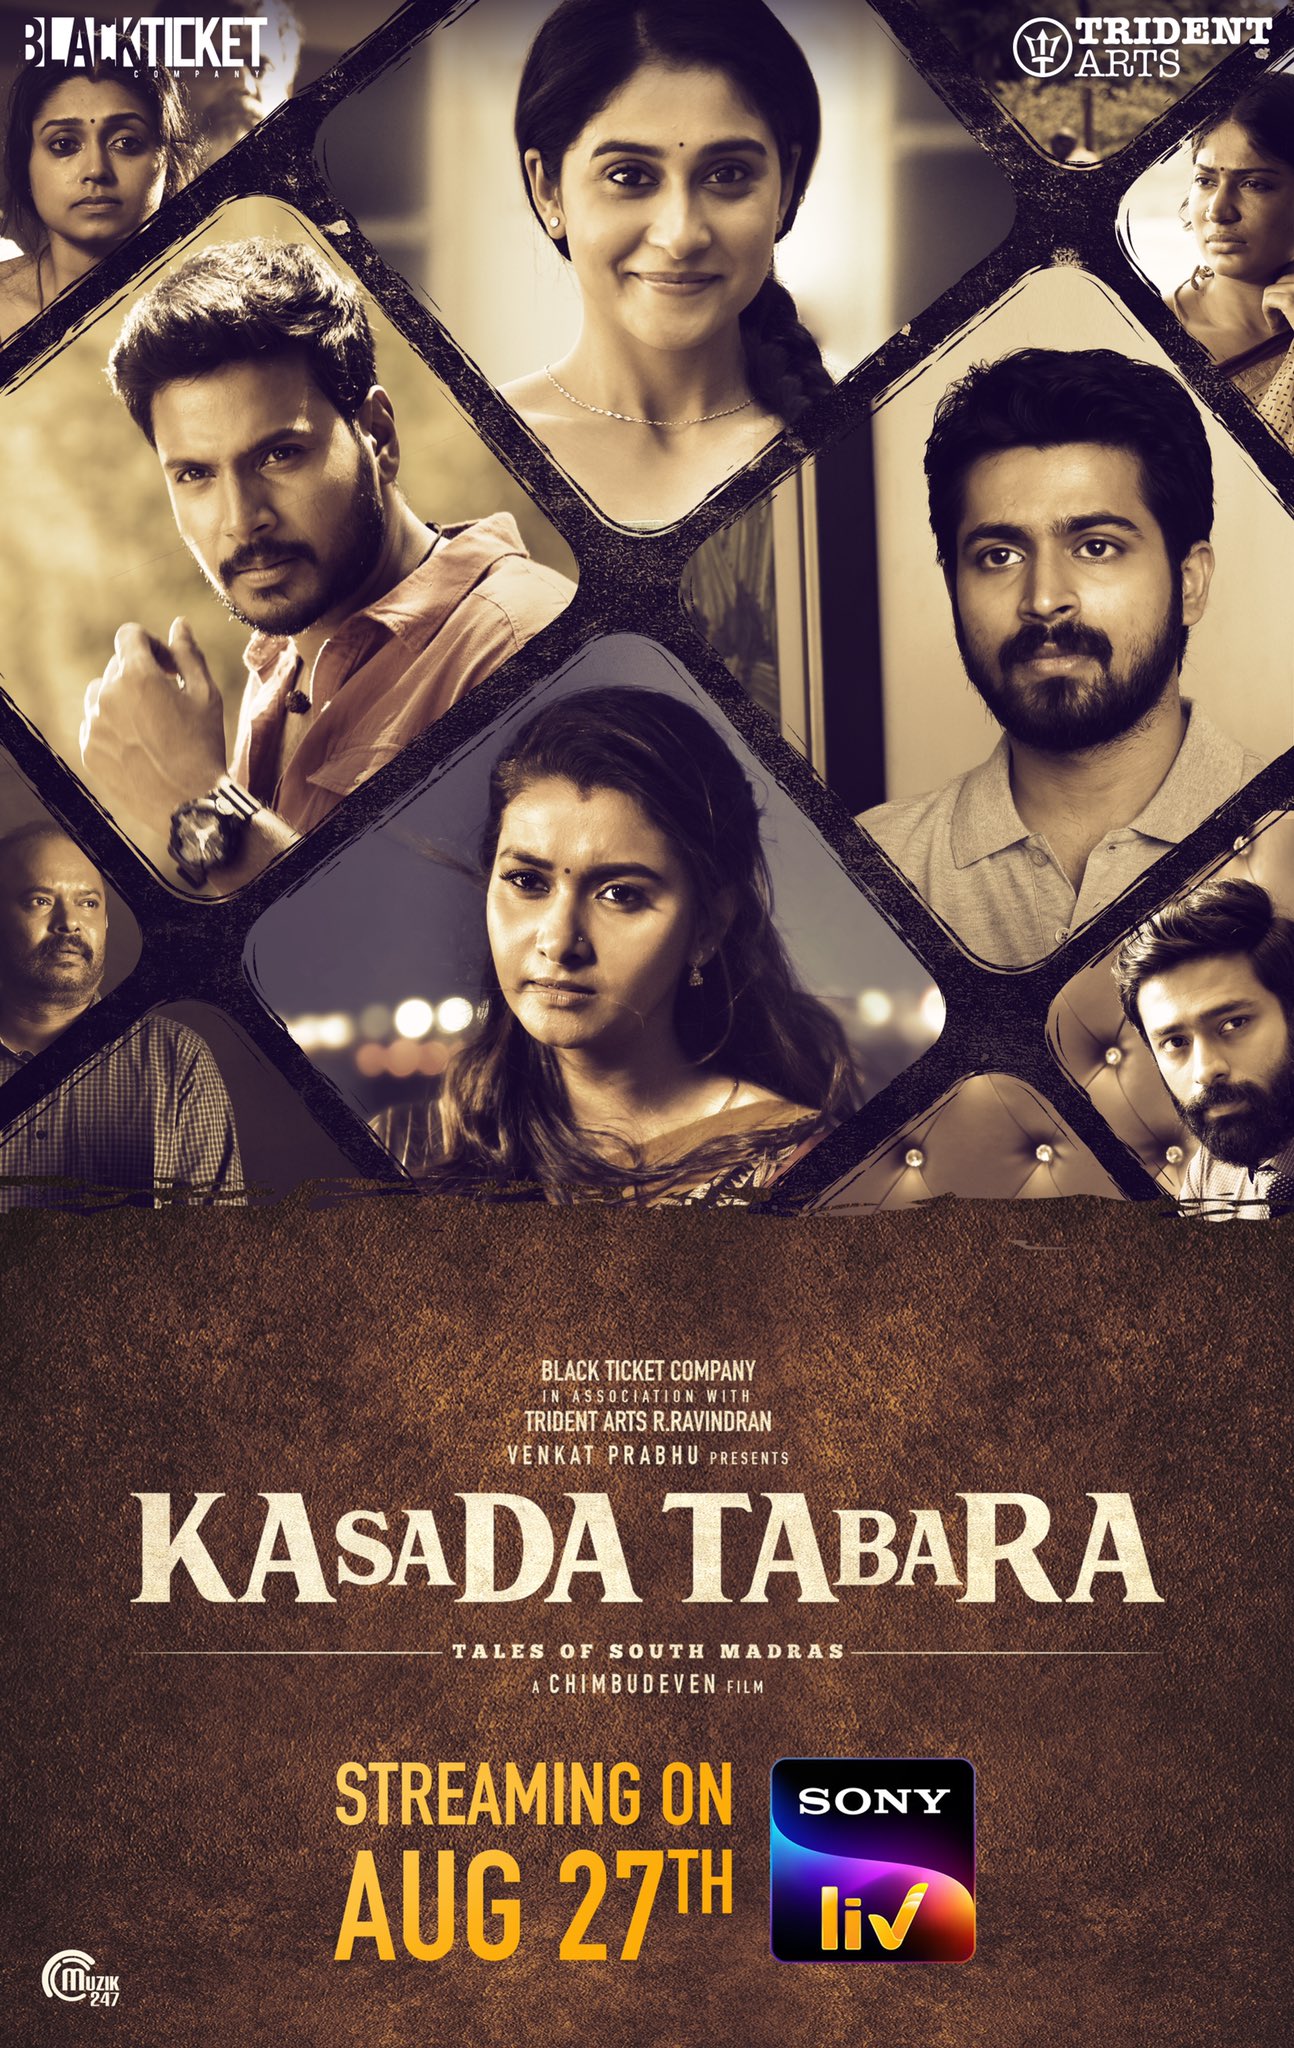 Sivakarthikeyan leaunches the trailer of Venkat Prabhu and Chimbudeven’s Kasada Tabara ft Harish Kalyan, Premgi